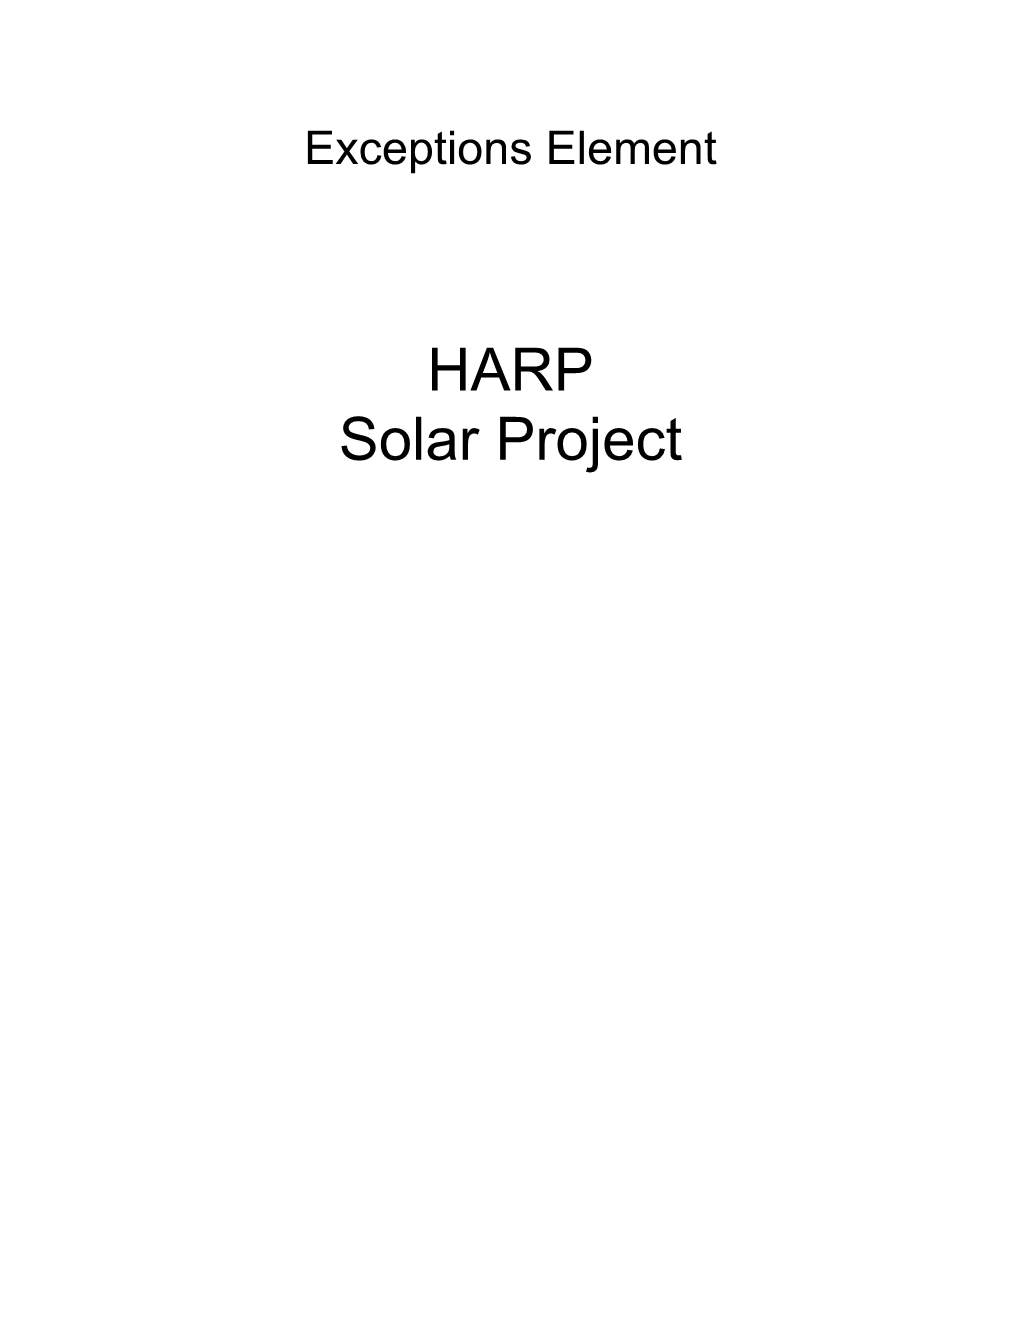 HARP Solar Project